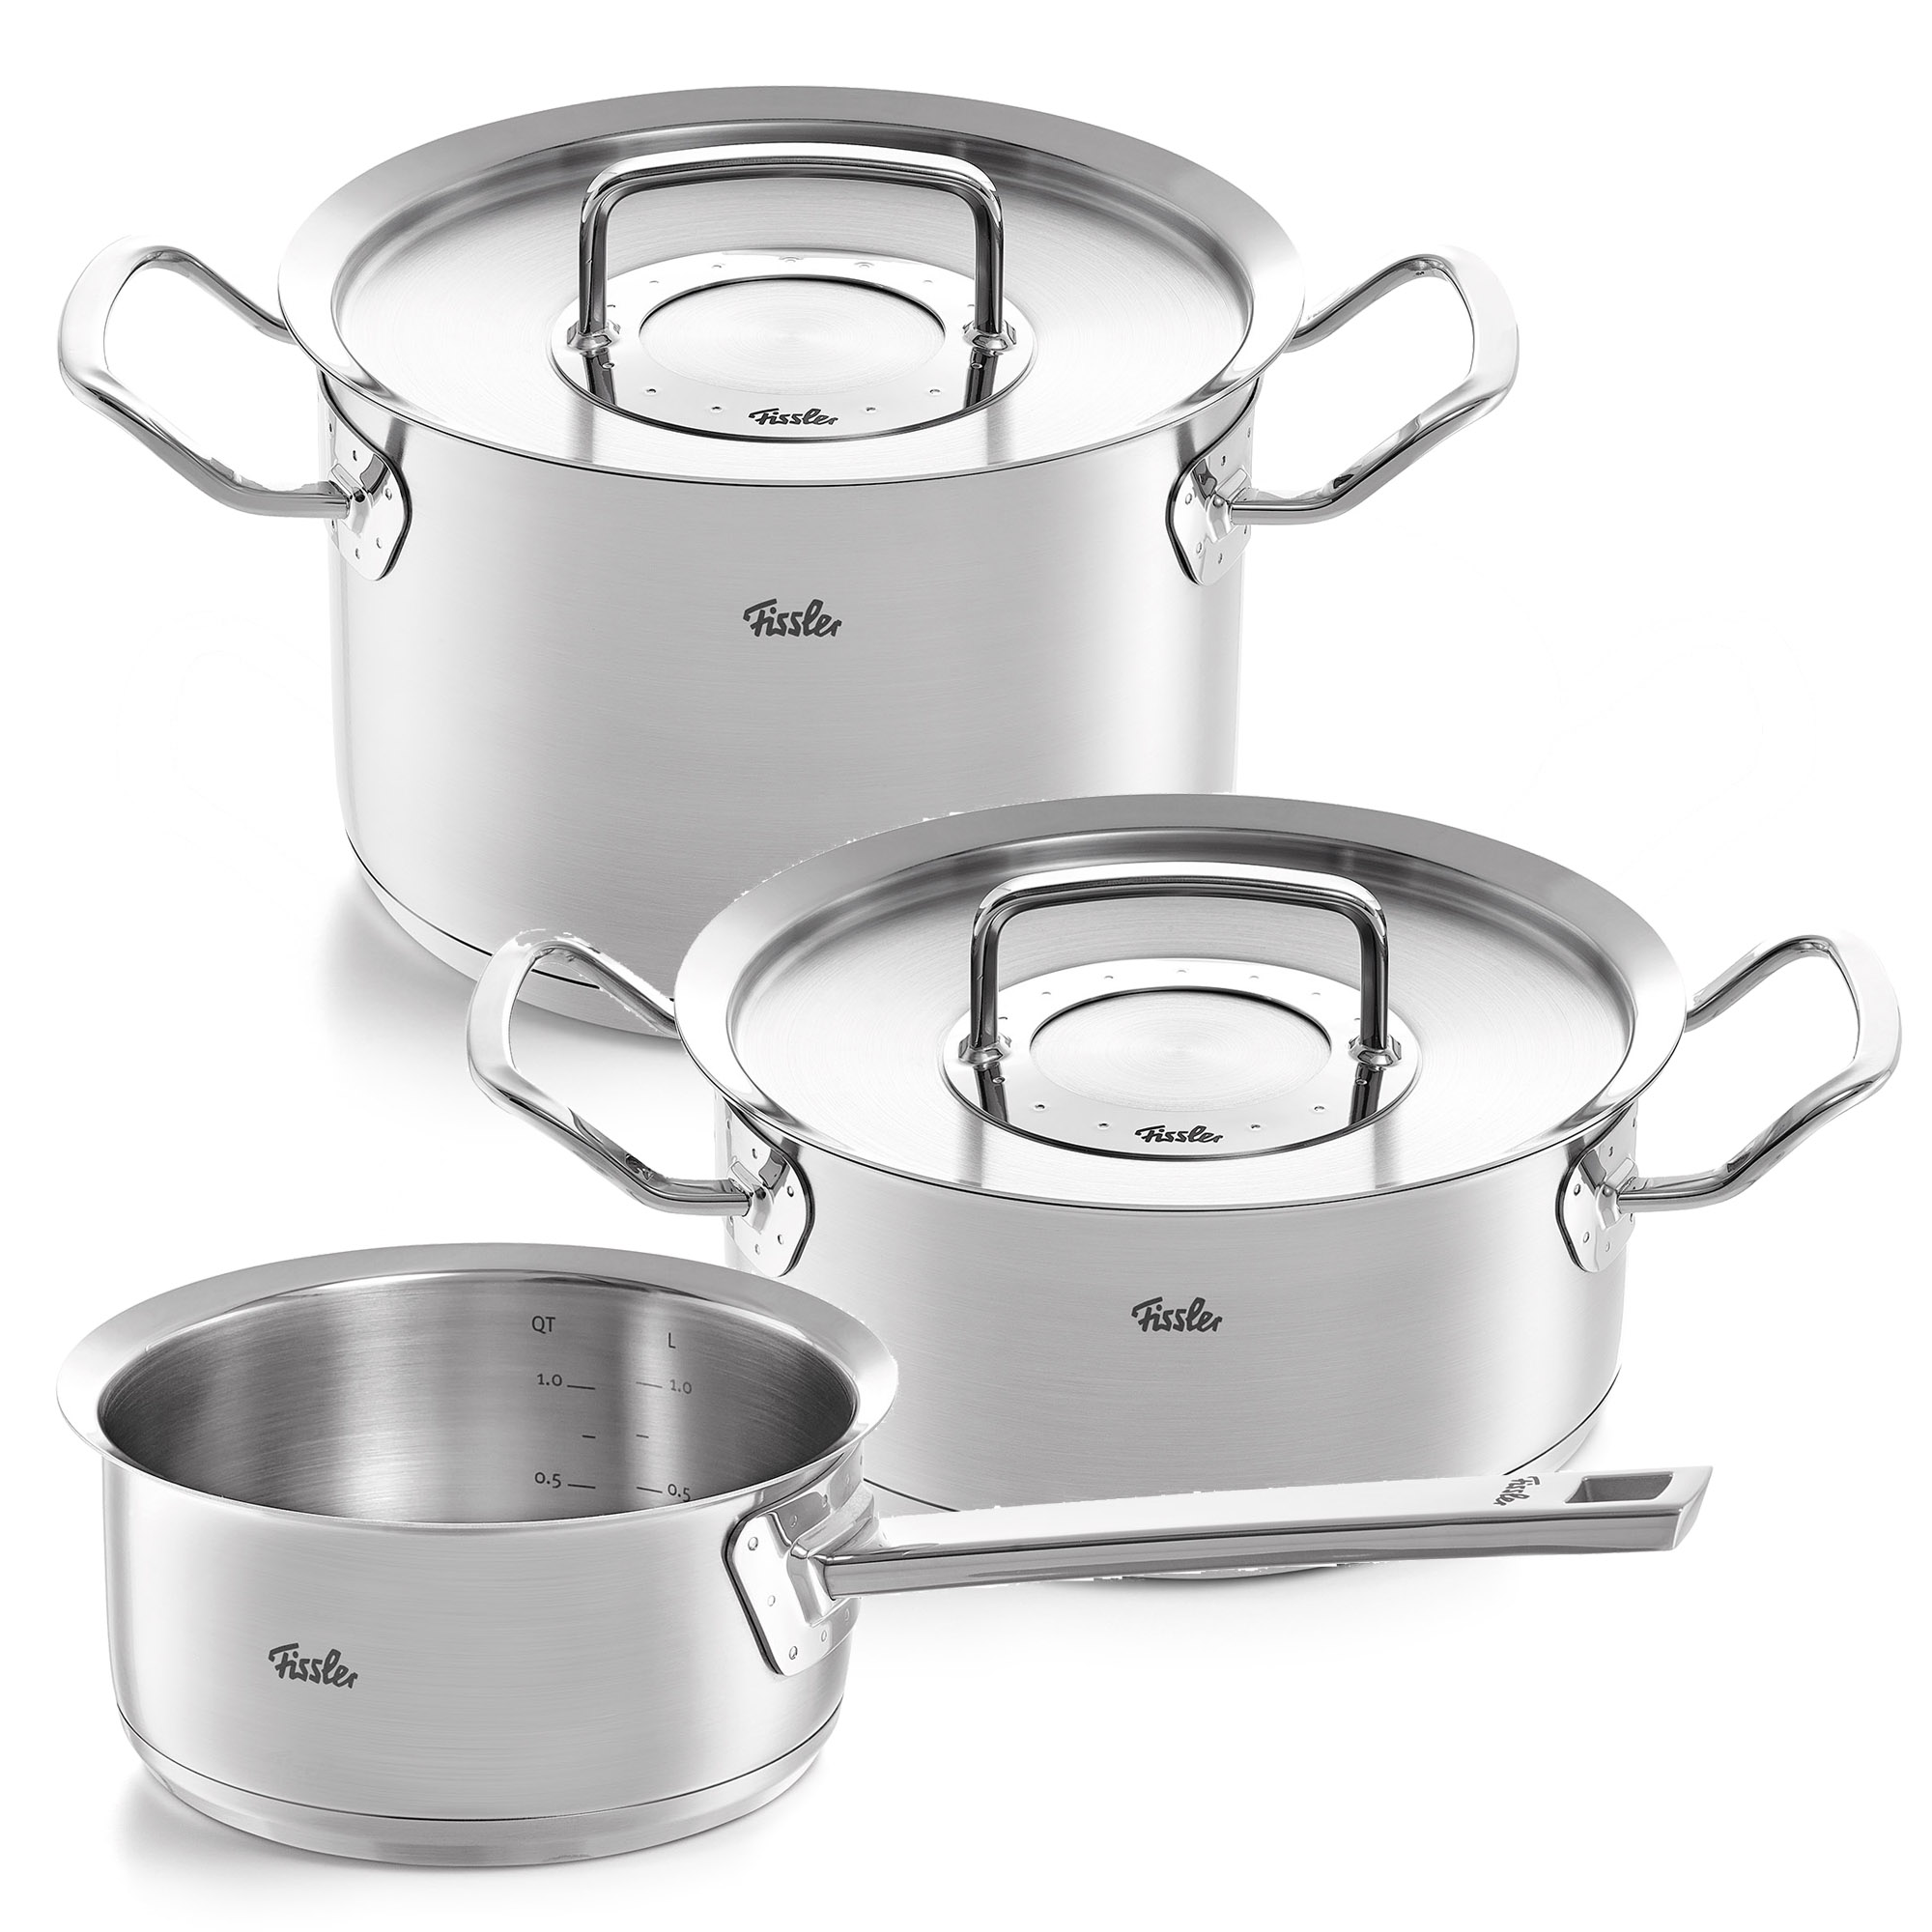 lid BAKING with metal | Englisch 3-piece | COOKING set FISSLER | Cooking | Collection Original & Profi sets cookware Cookware 1a-Neuware